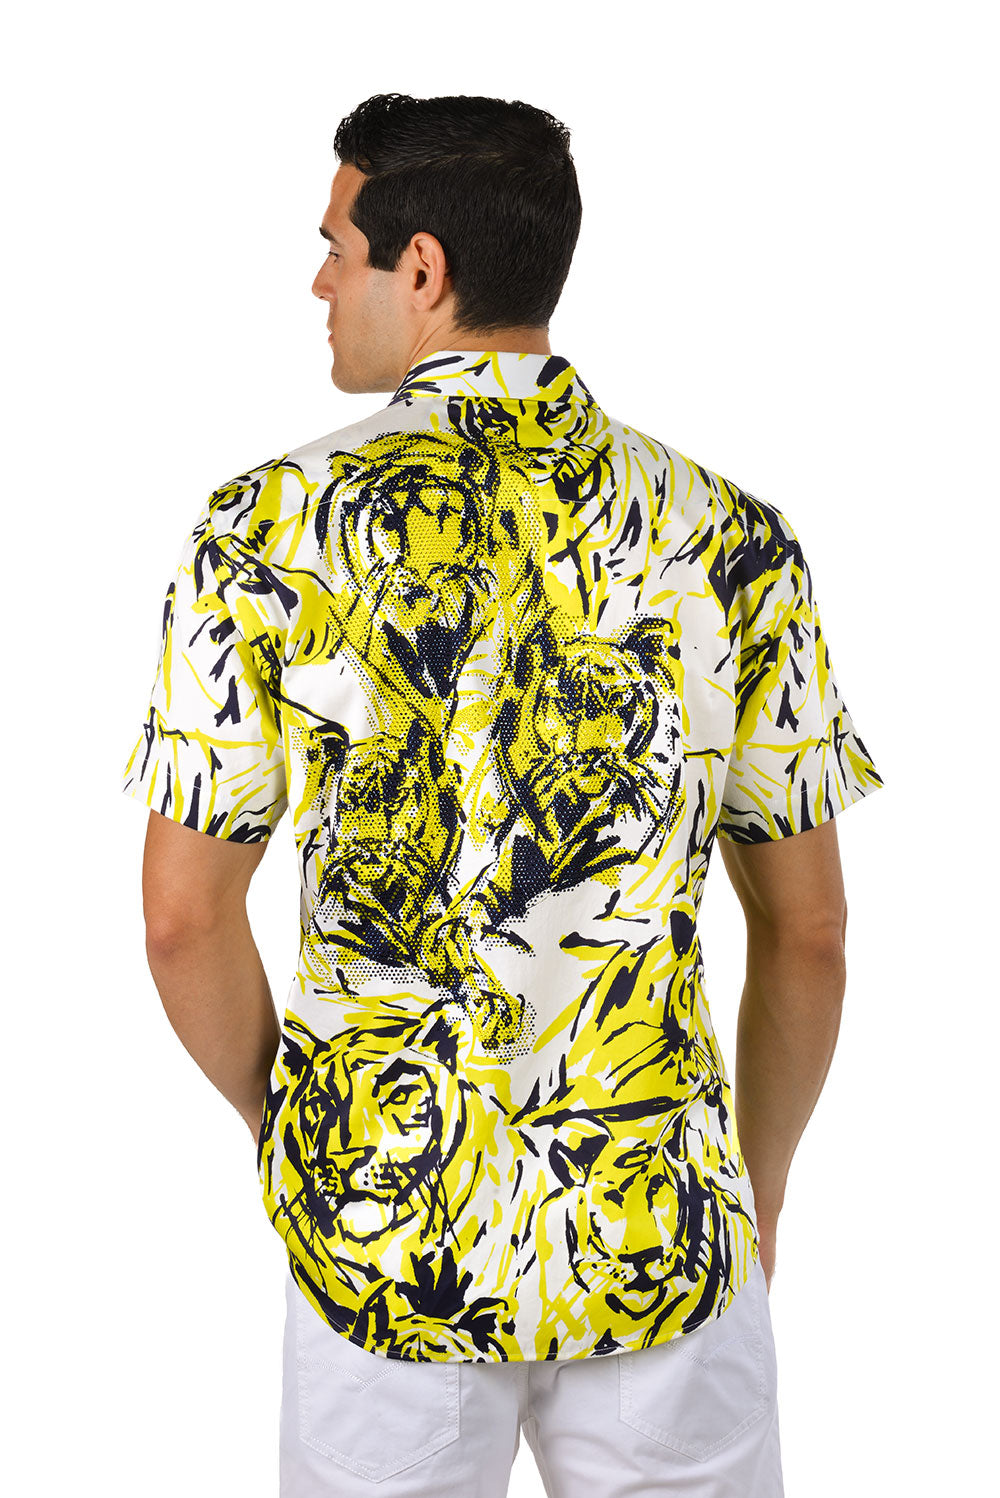 Barabas Men's Lion Printed Rhinestone Short Sleeve Shirt SSR18 Citron